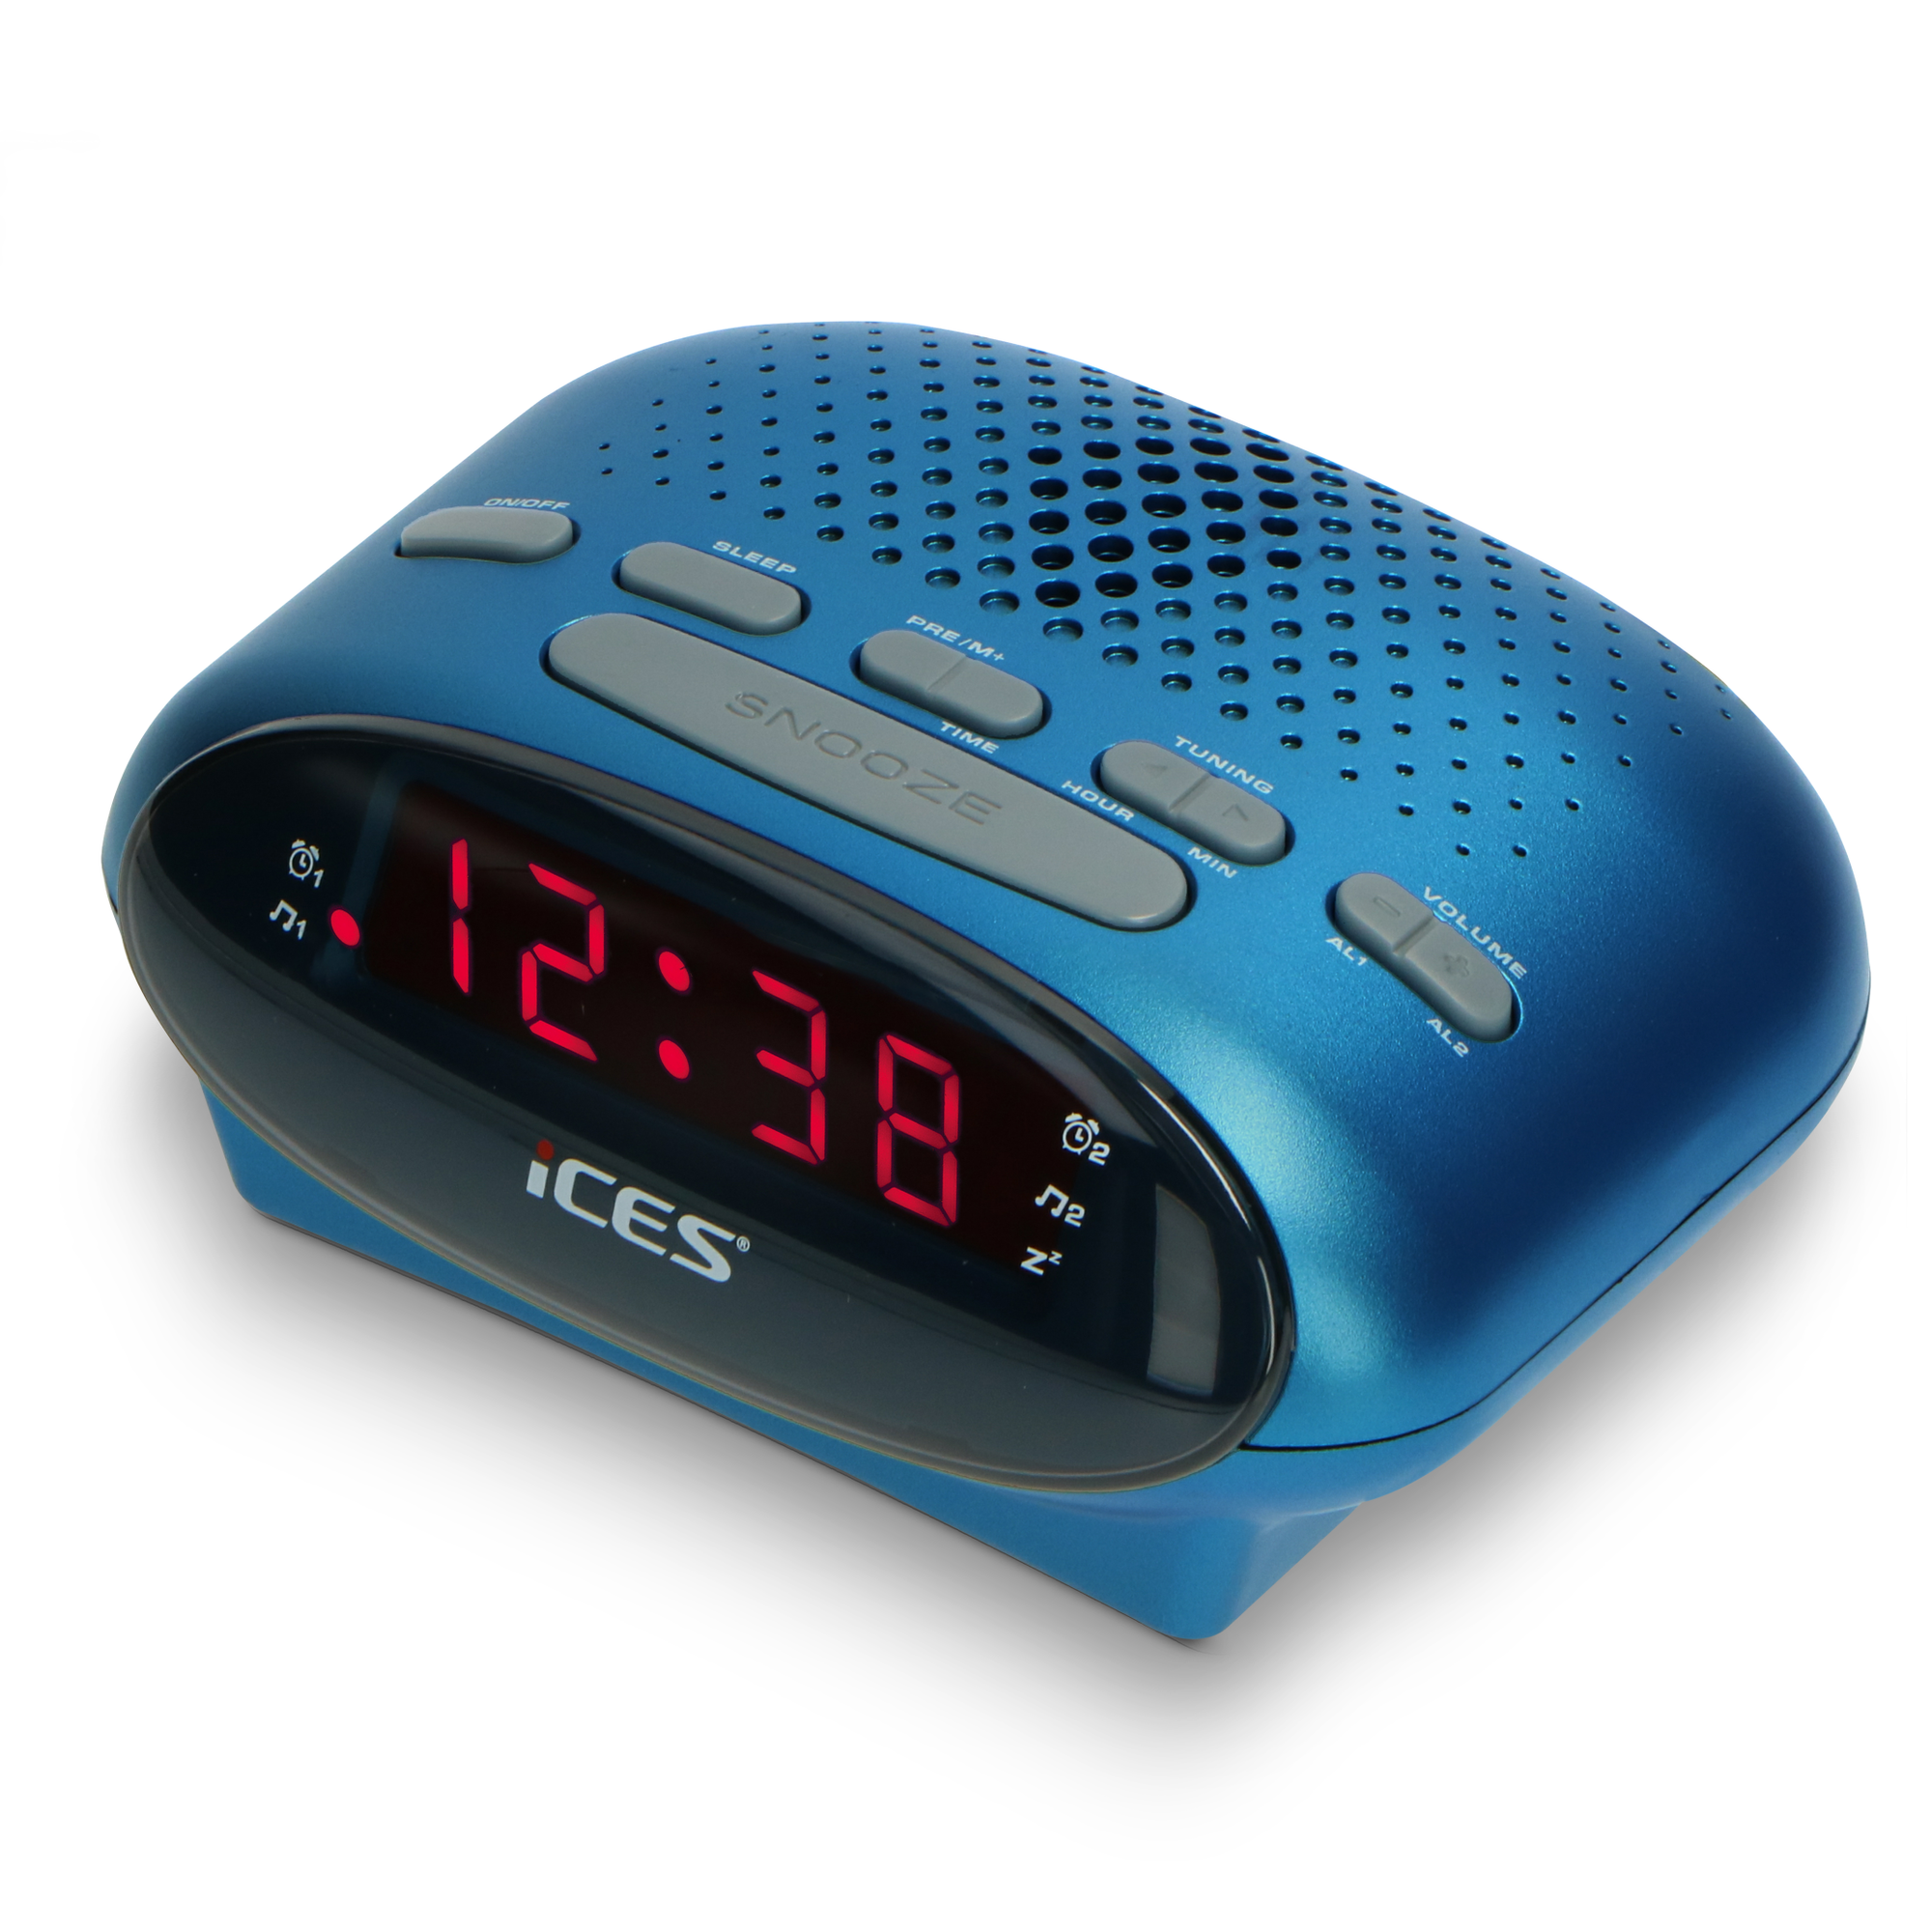 UKW Tuner, Blue ICES PLL Blau FM, ICR-210 Radiowecker,